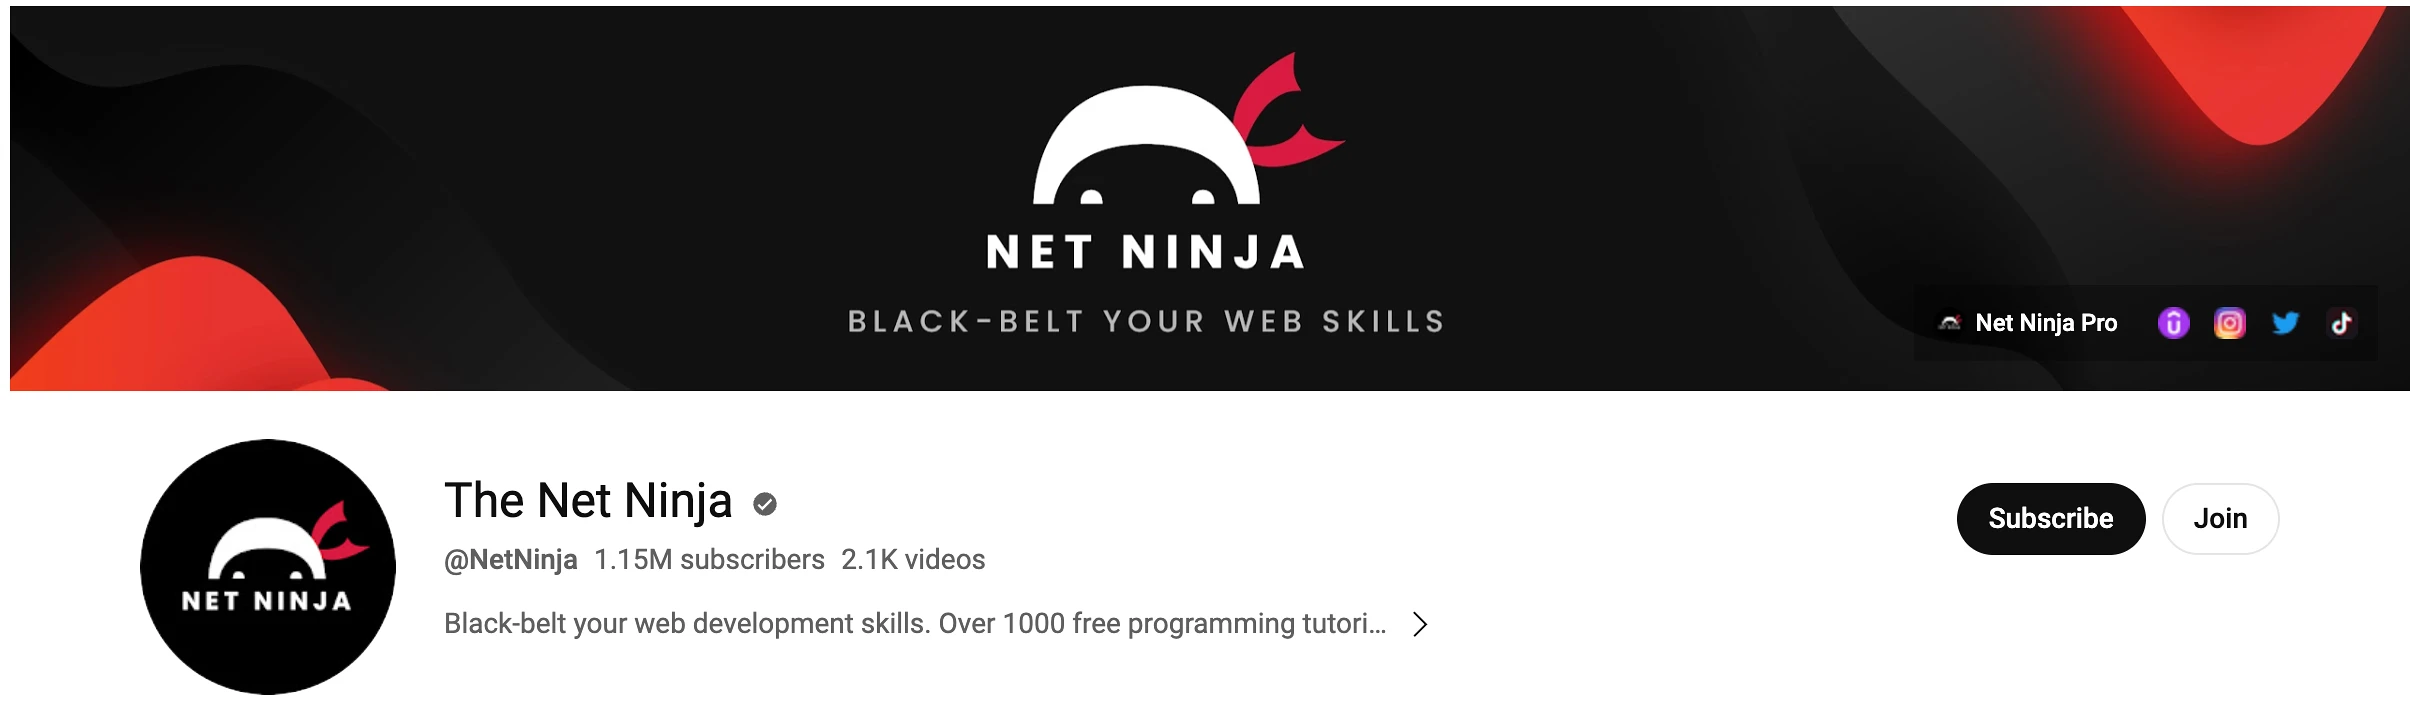 The Net Ninja: List of Best Web Design and Web Development Youtube Channels